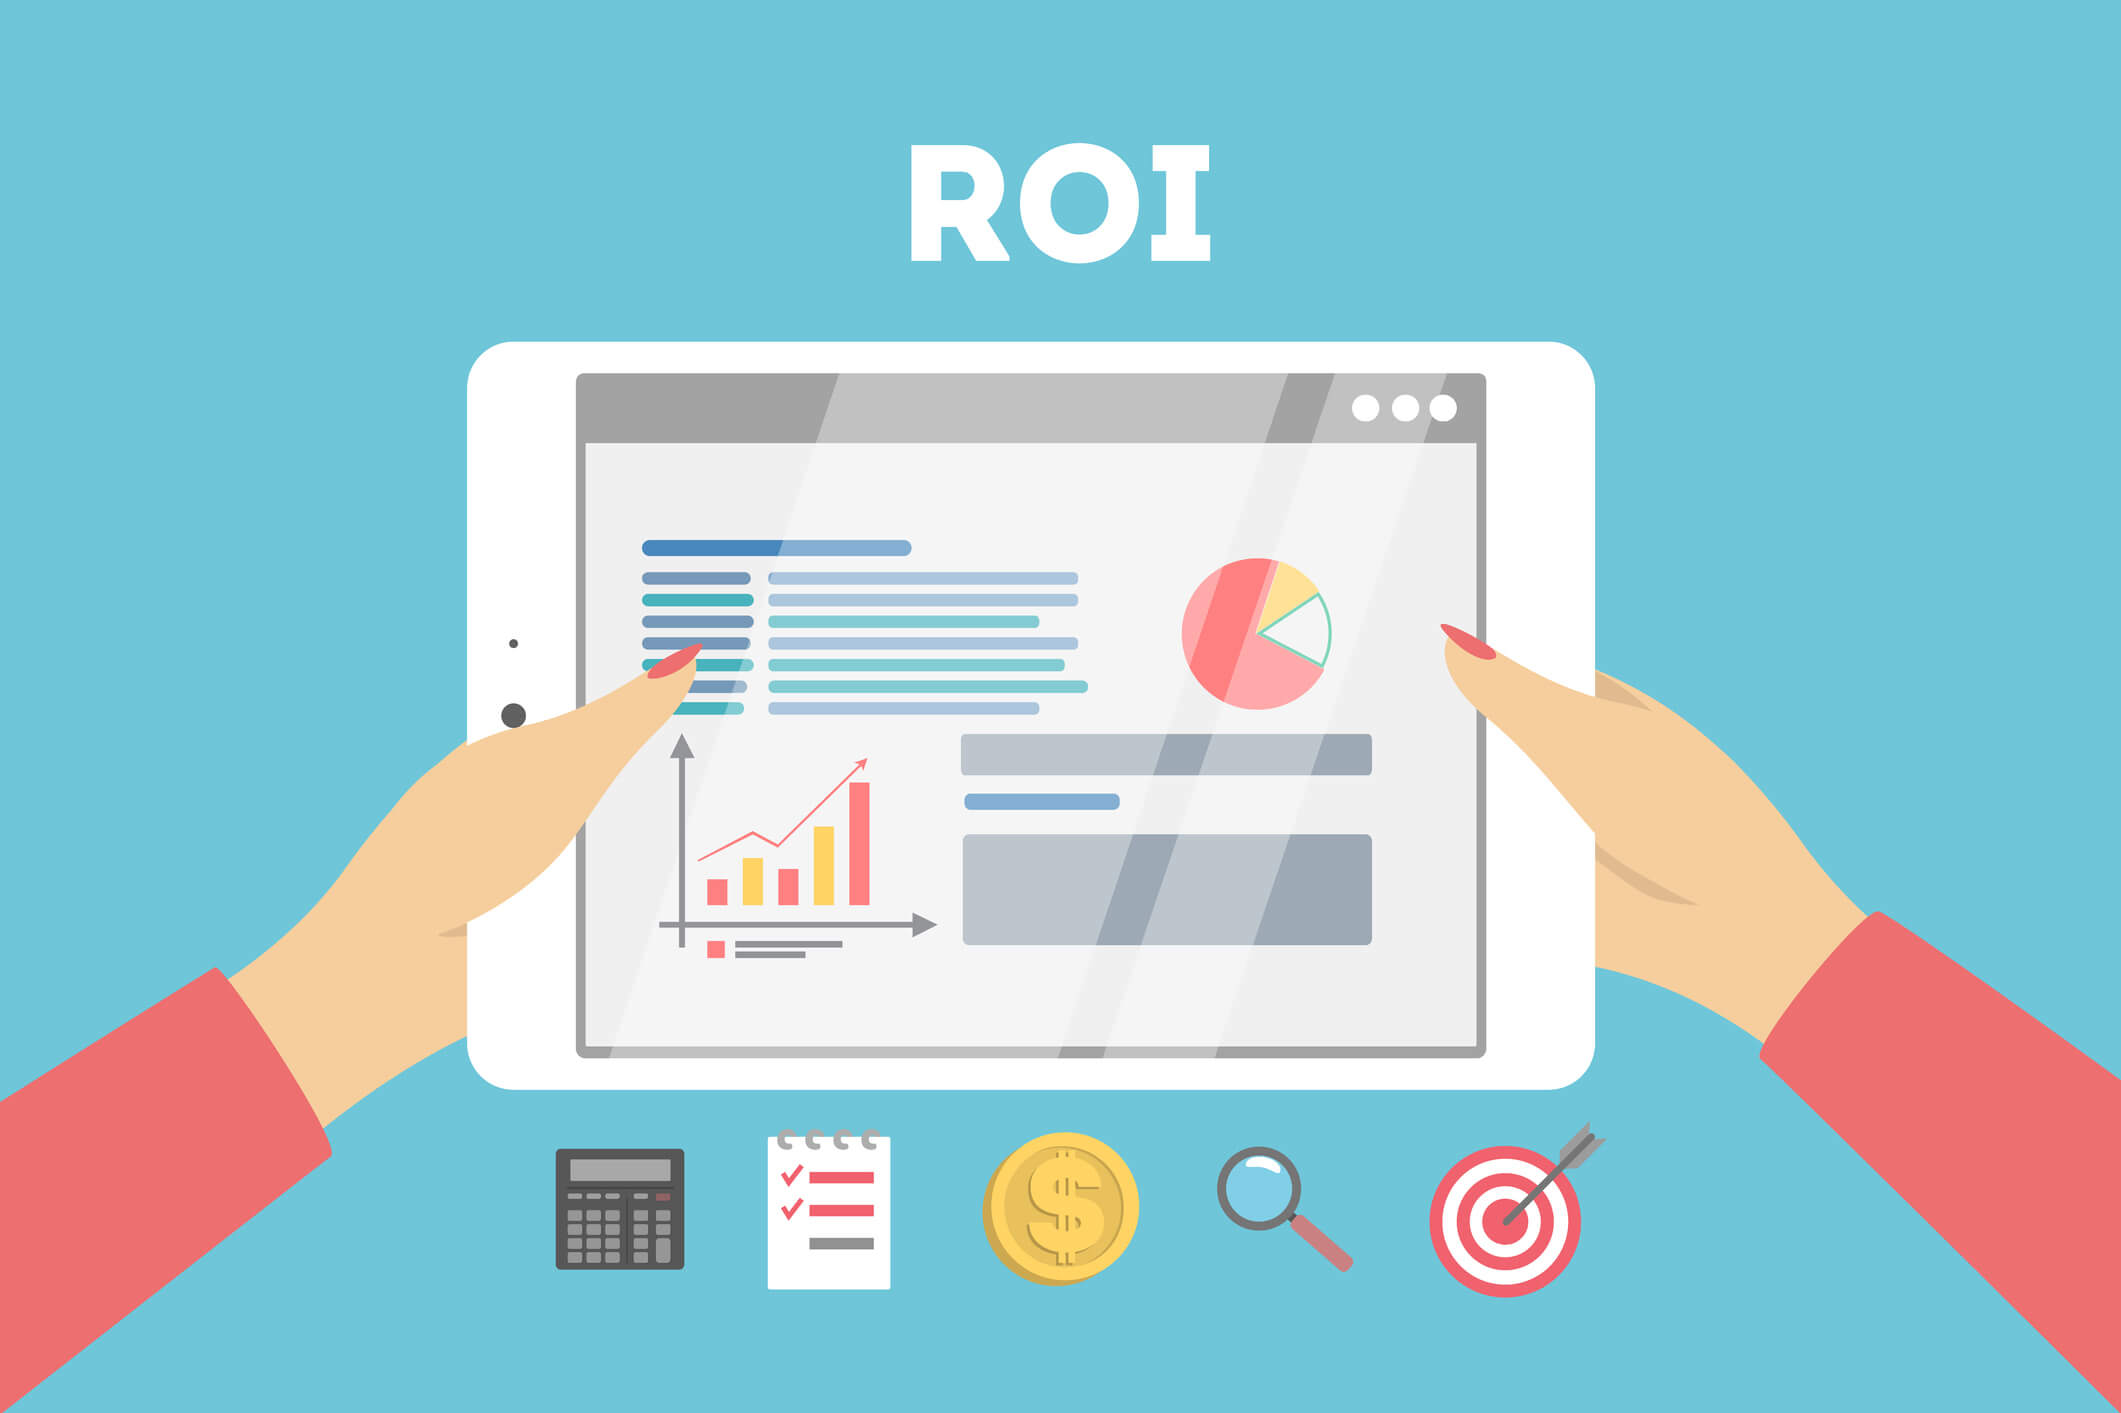  ROI یا نرخ بازگشت سرمایه چیست و چگونه آن را محاسبه کنیم؟